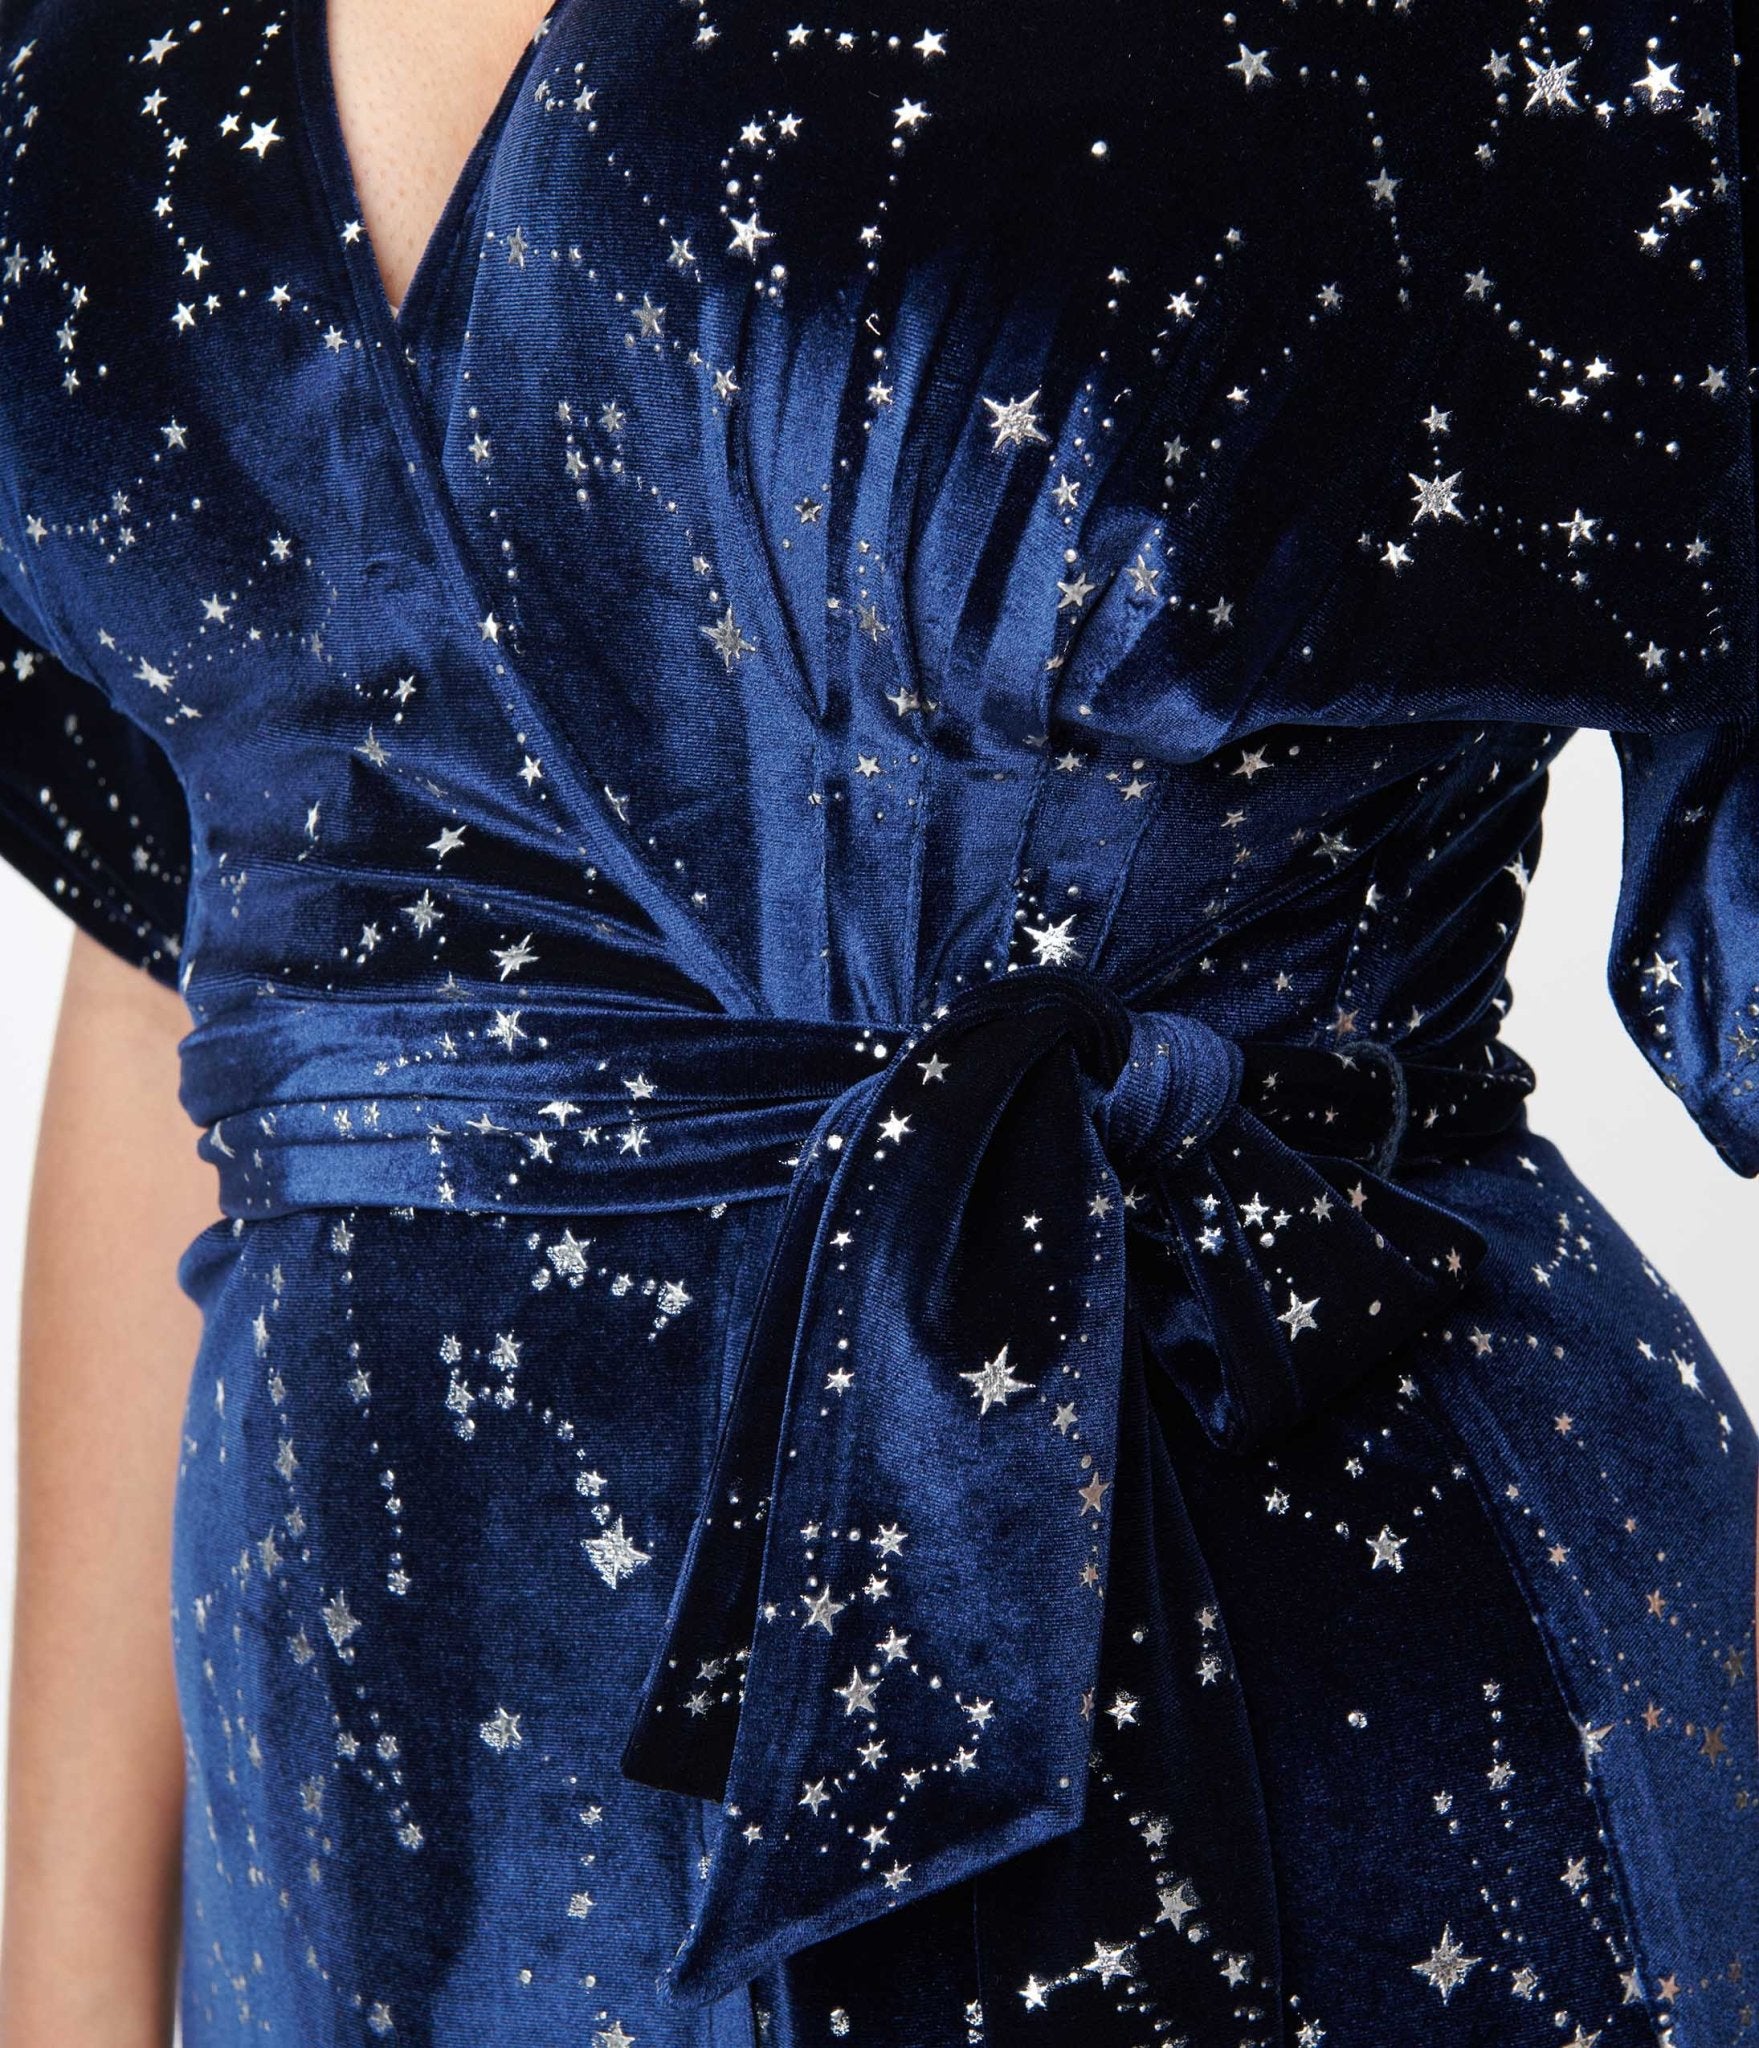 women moon phase galaxy print crossover dress